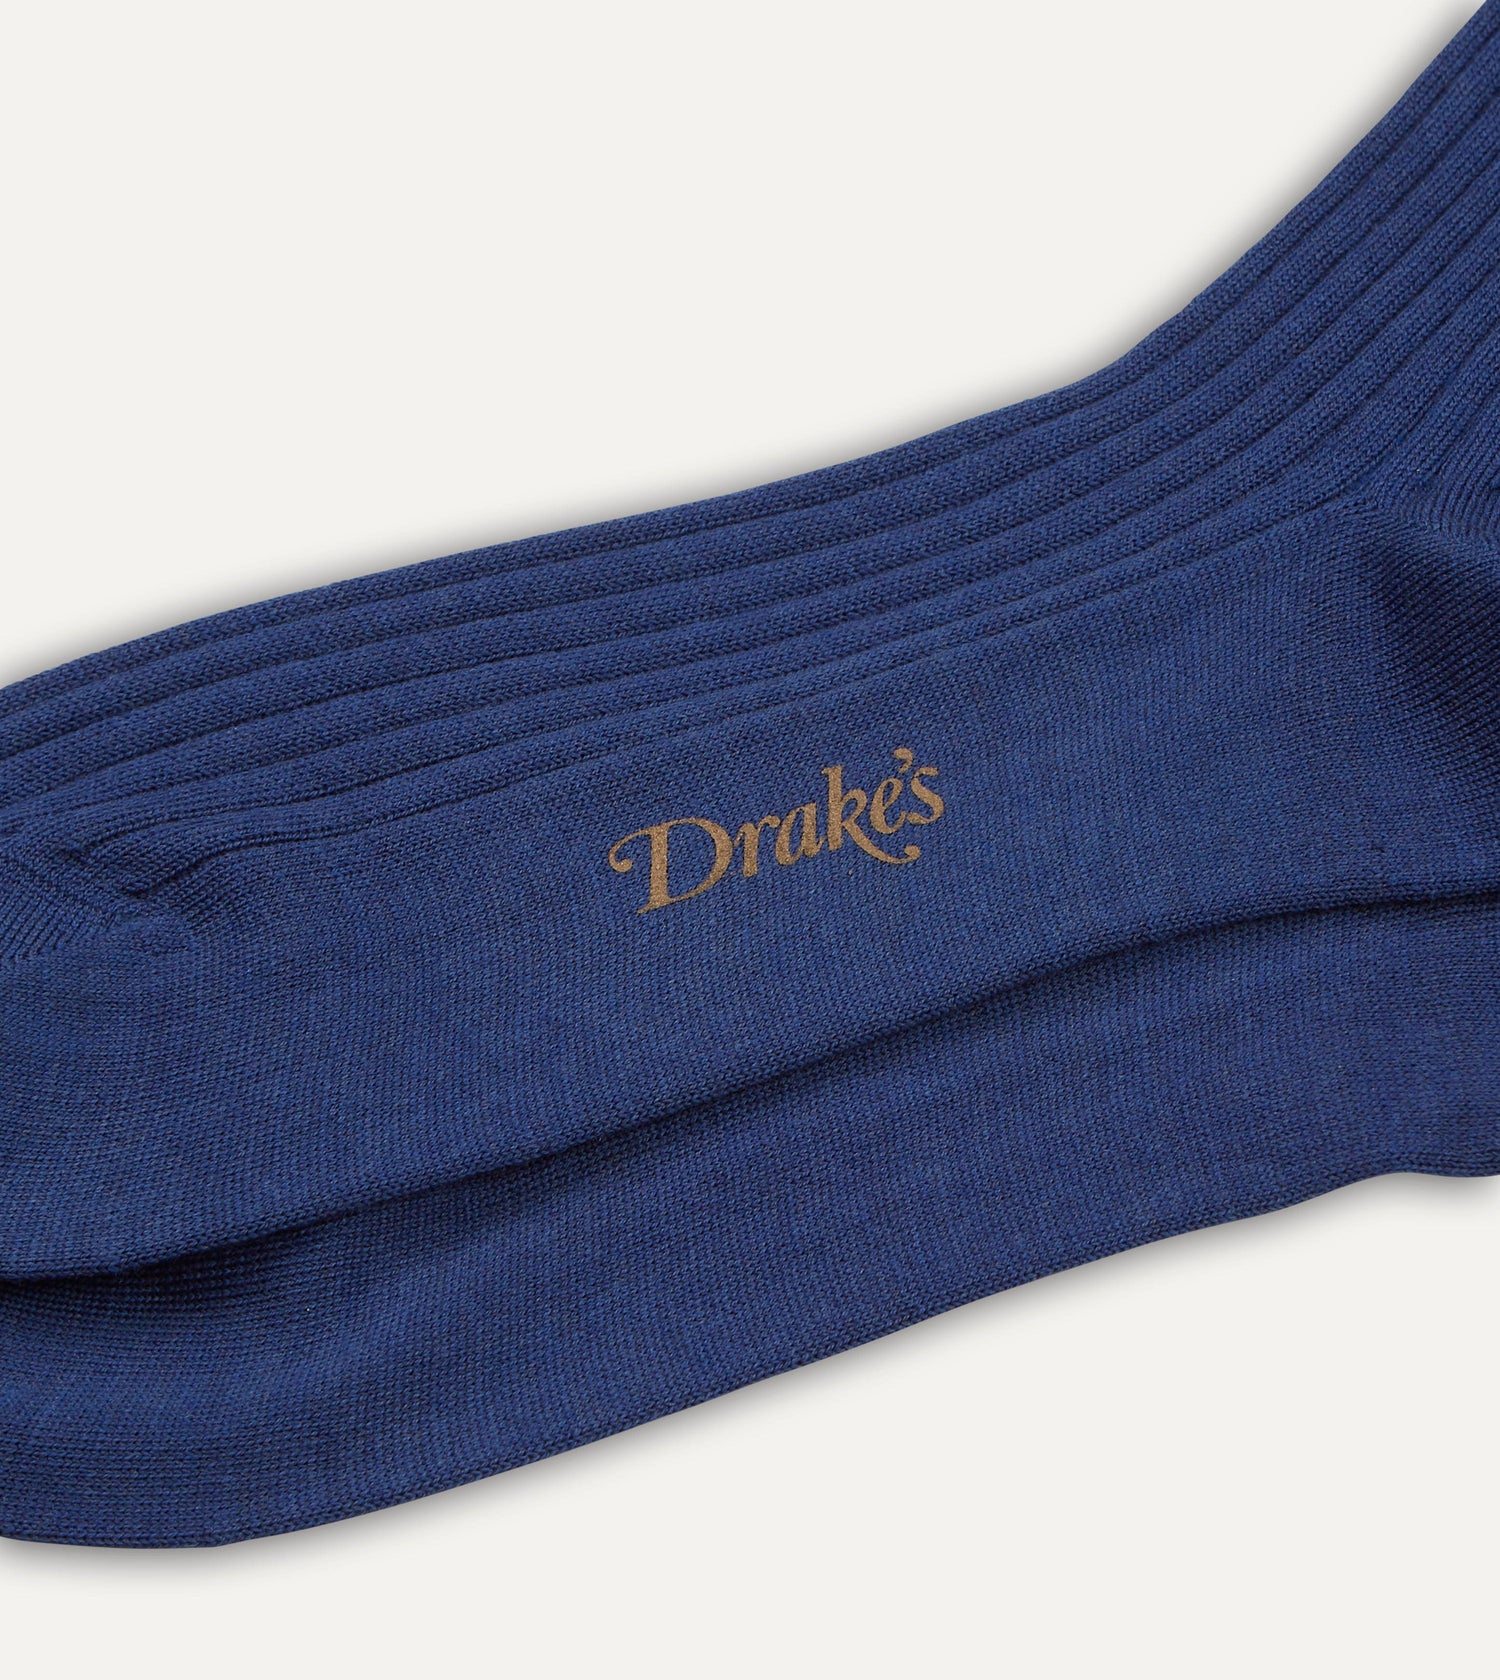 Blue Wool Over-the-Calf Socks